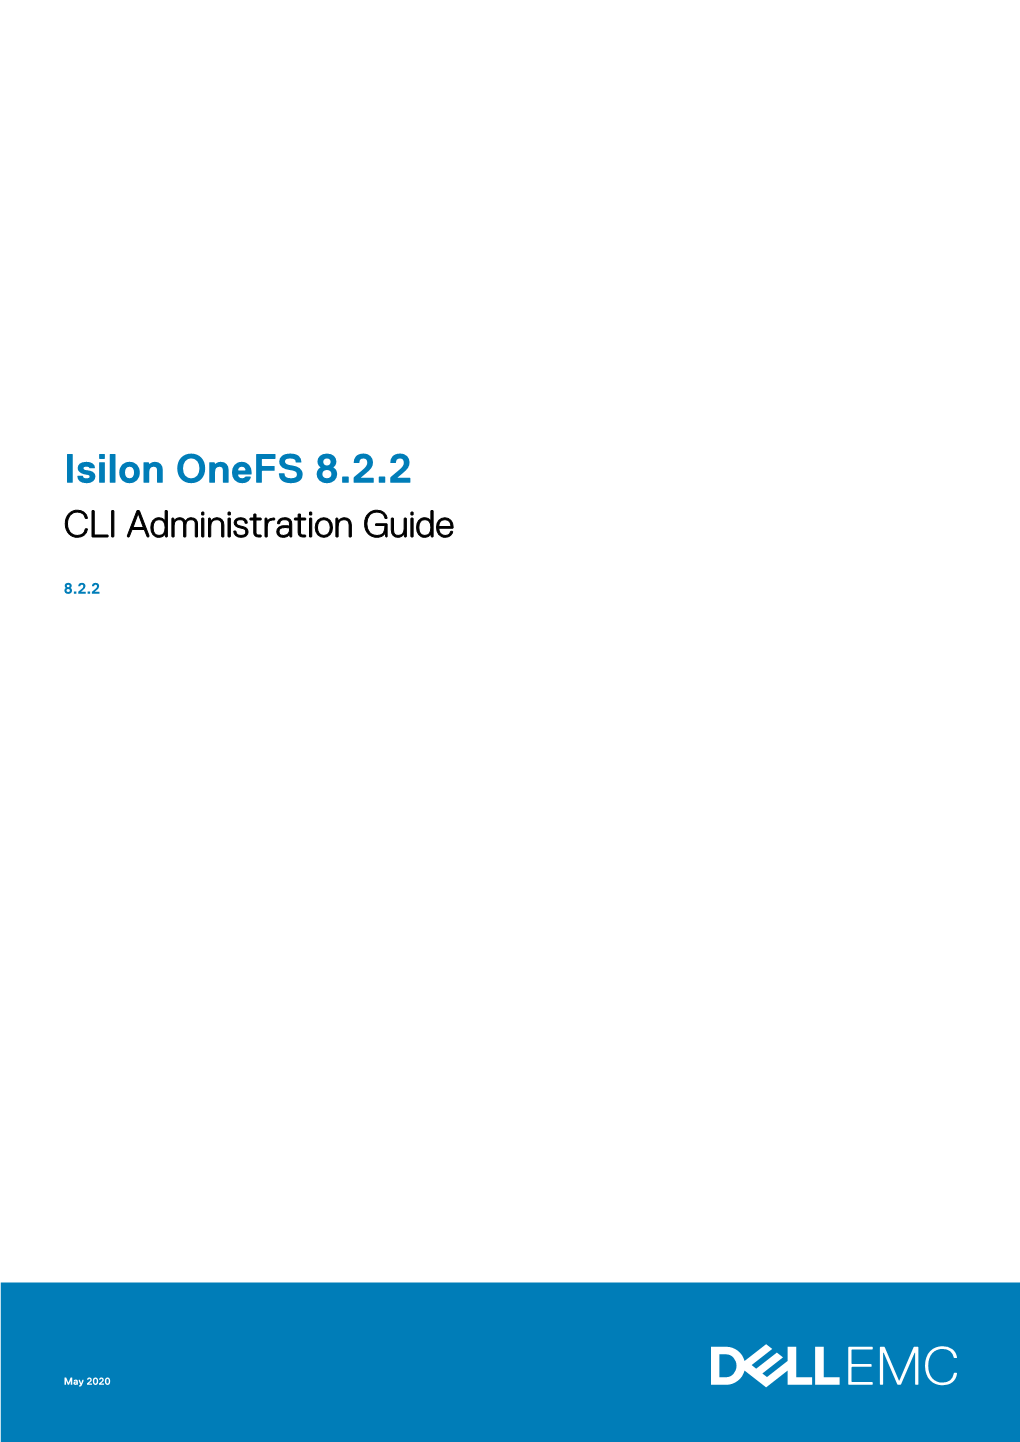 Isilon Onefs 8.2.2 CLI Administration Guide